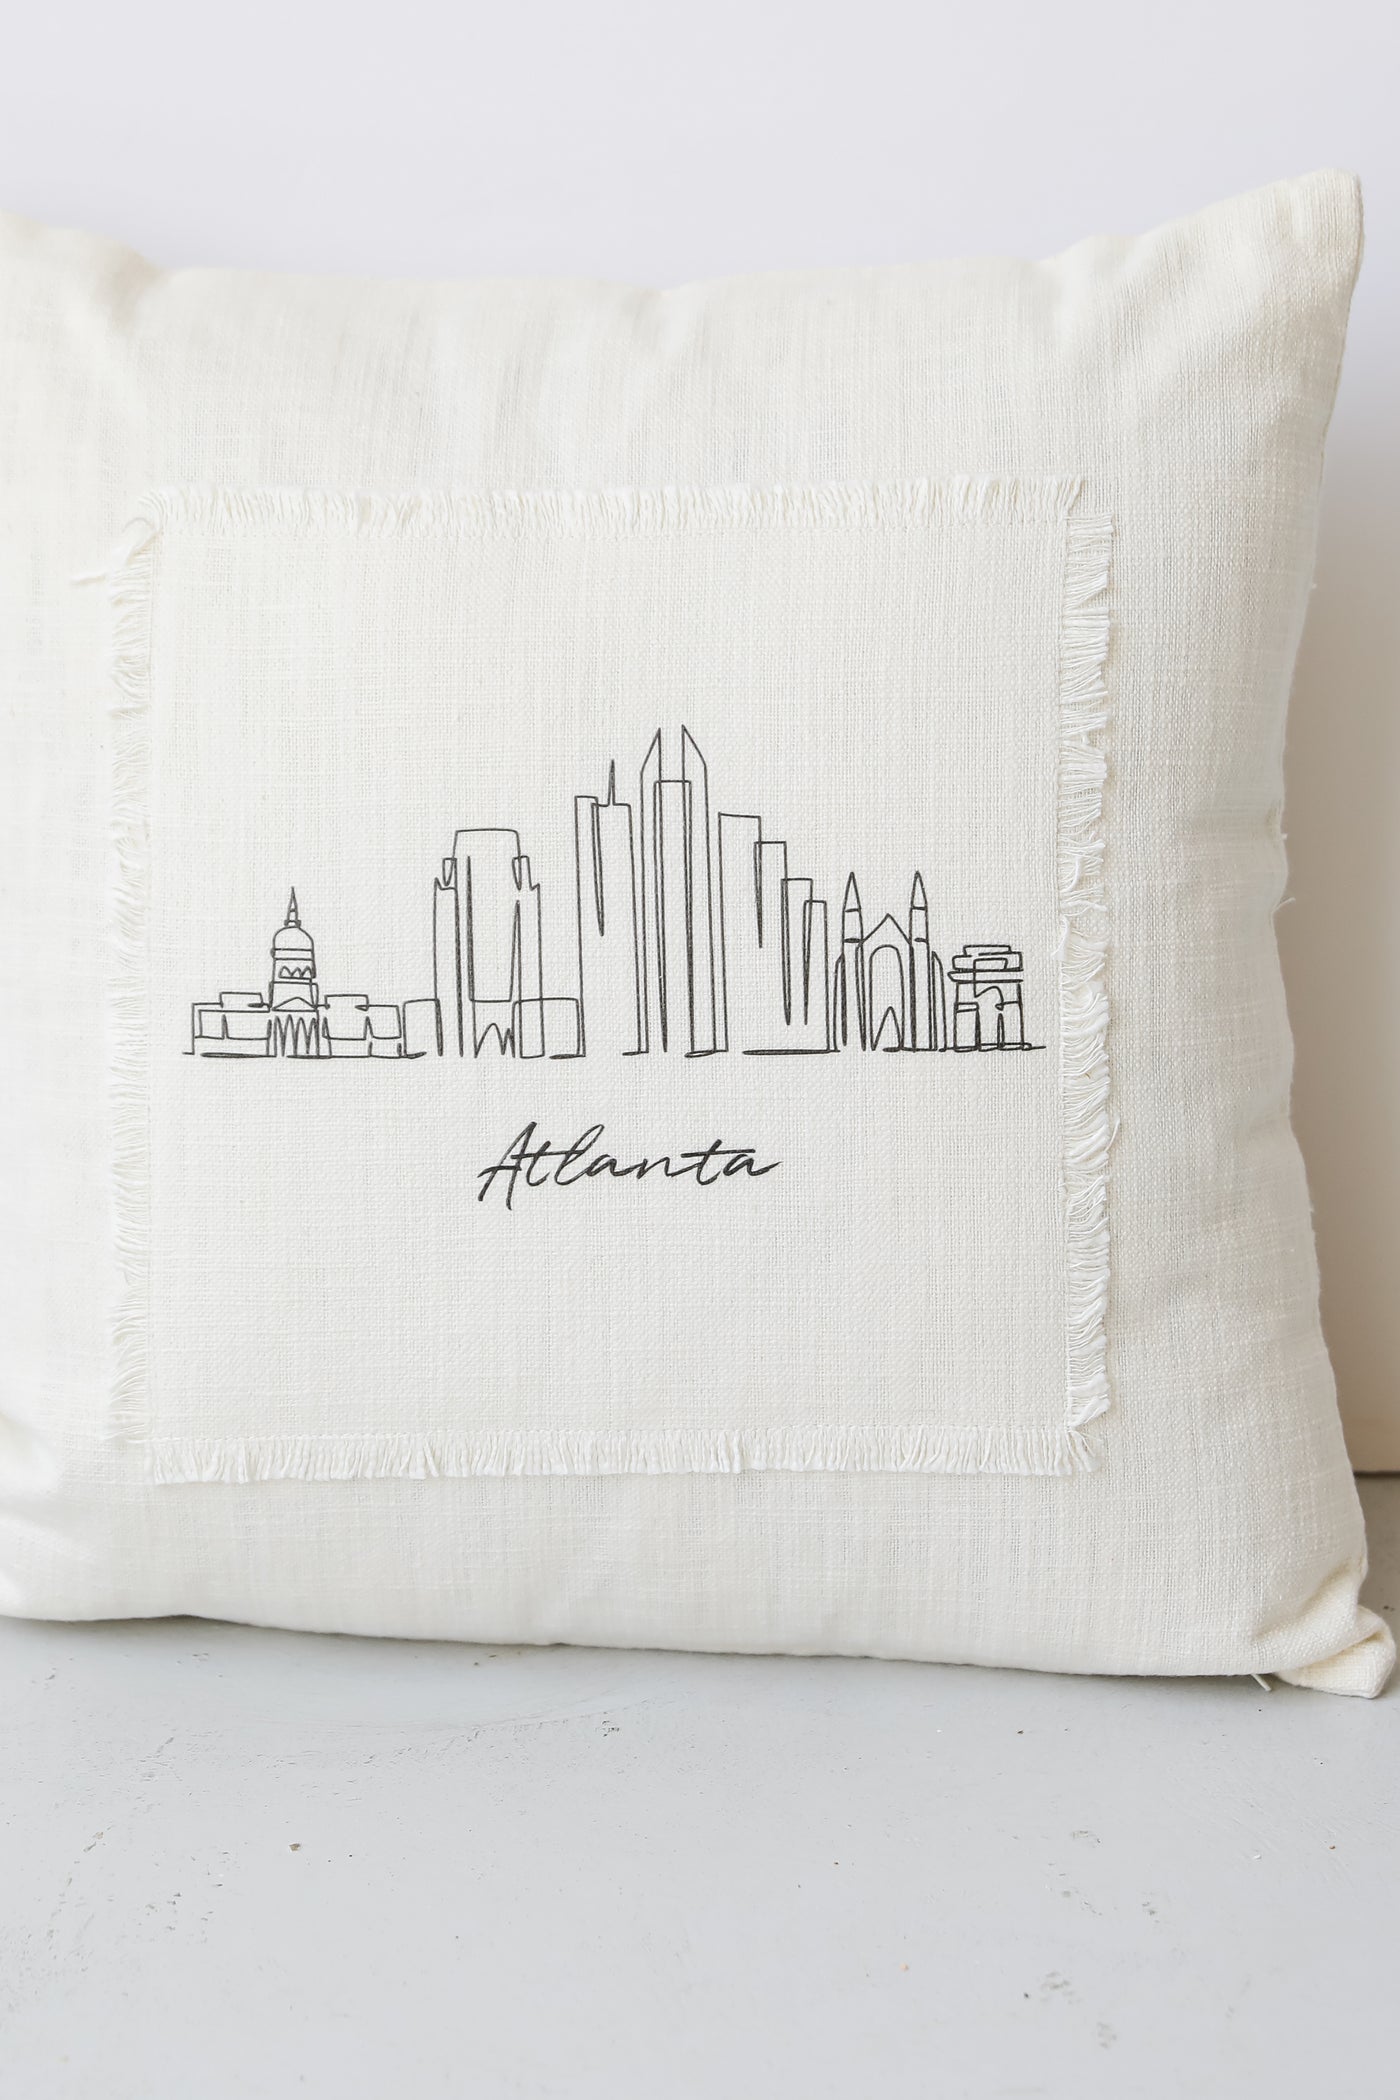 Atlanta City Scape Pillow close up